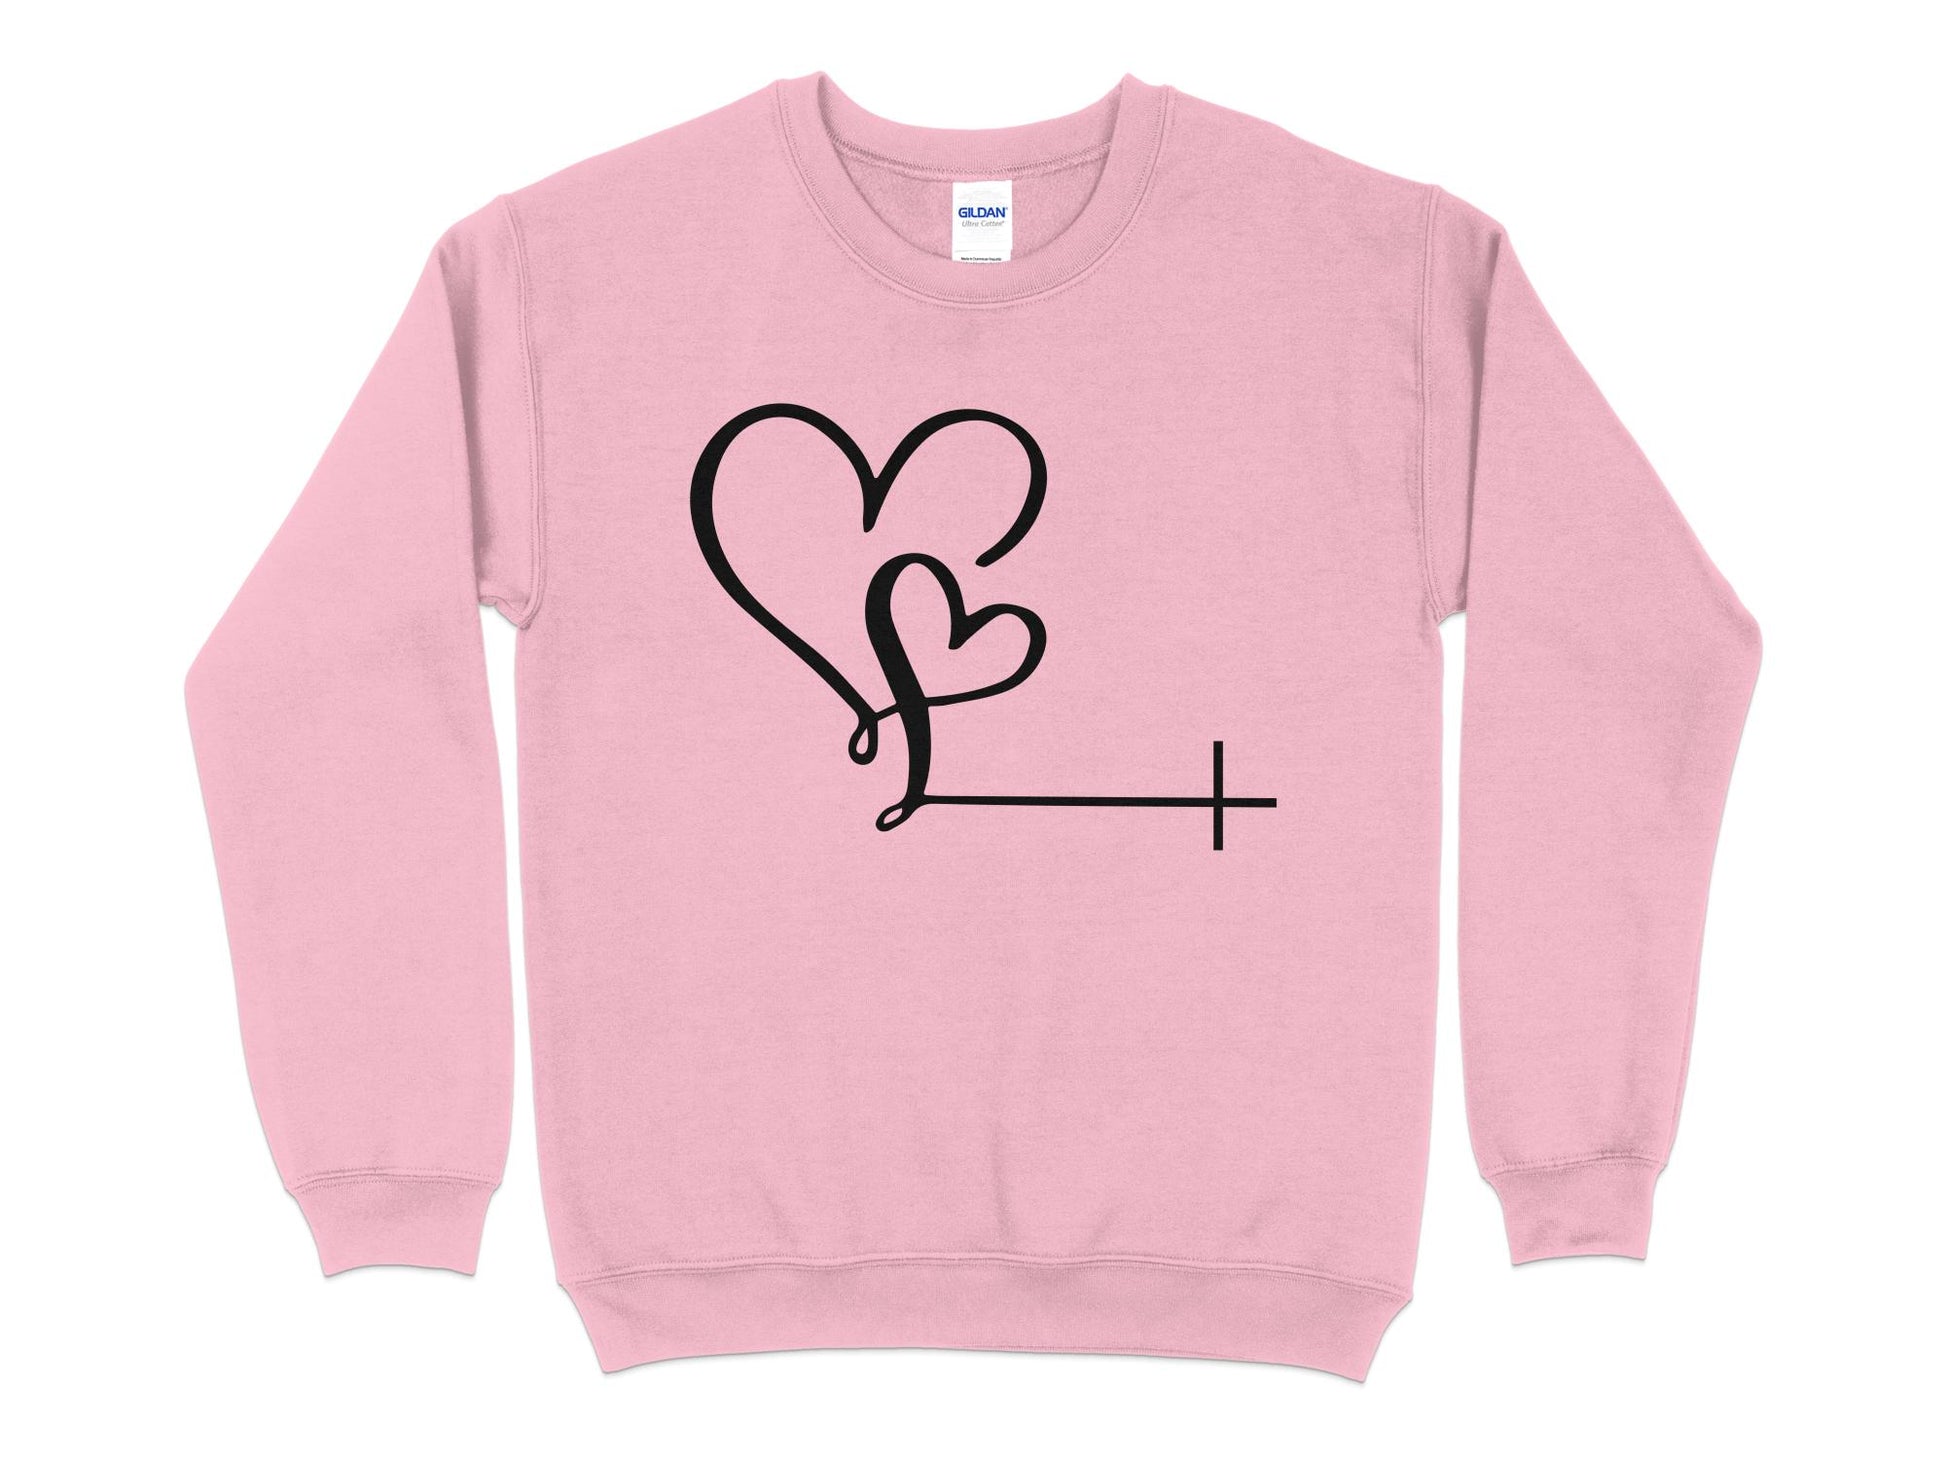 Unisex Love Heart Christian Sweatshirt, Casual Pullover,Gift for Him and Her, Cozy Apparel, Christian Faith Shirt - Mardonyx Sweatshirt S / Light Pink